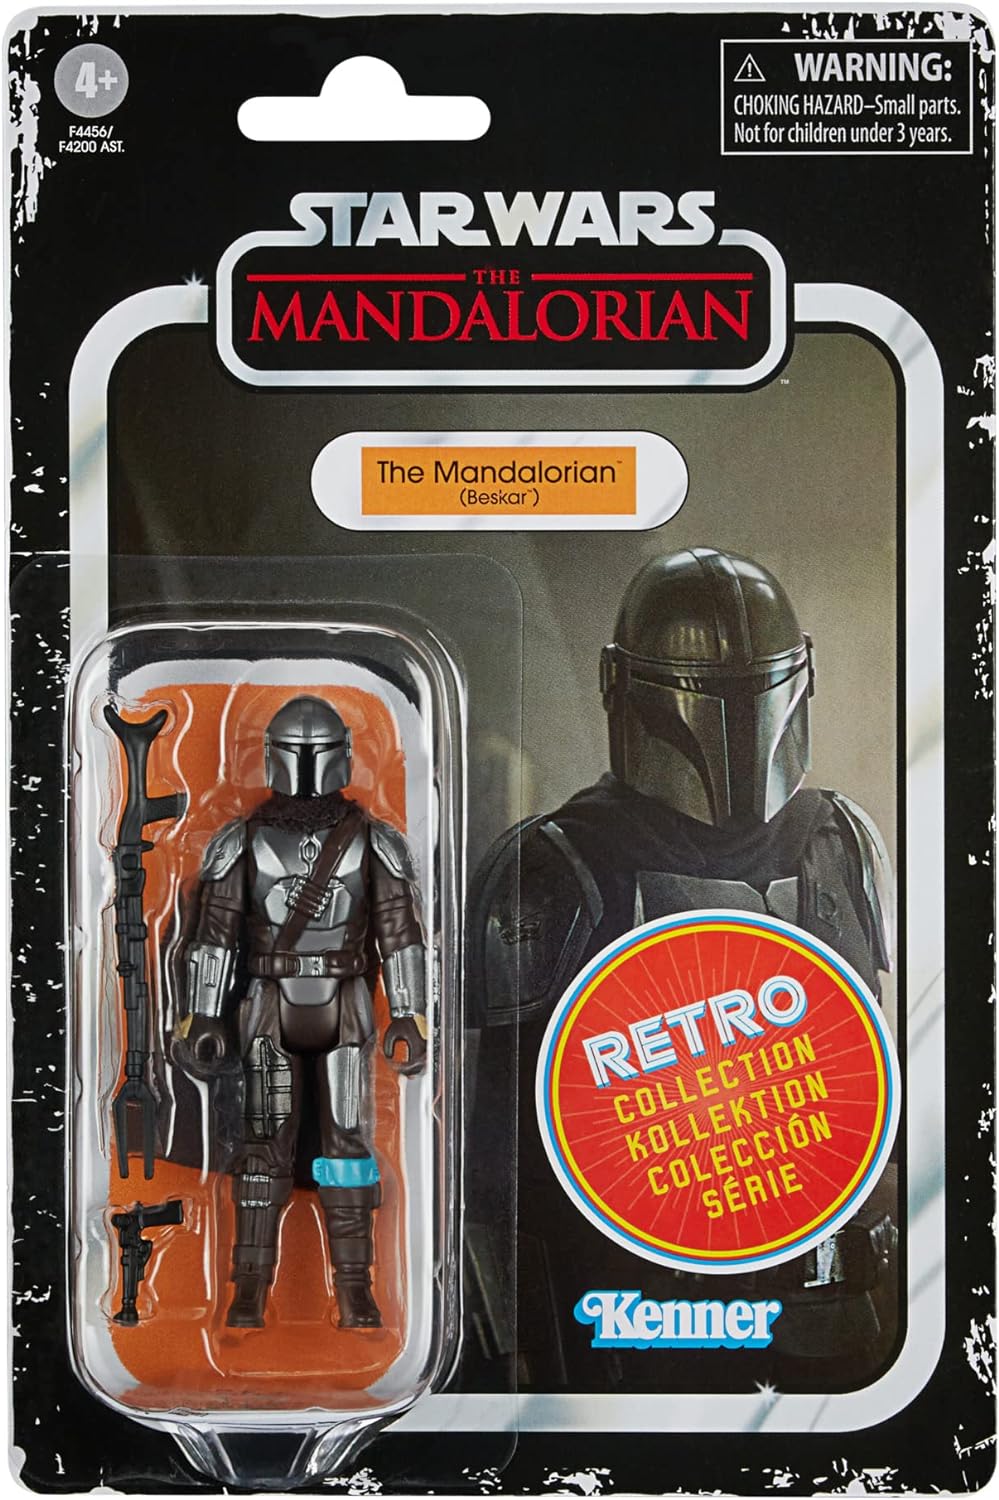 Retro Collection The Mandalorian (Beskar) Toy 3.75-Inch-Scale The Mandalorian Collectible Action Figure